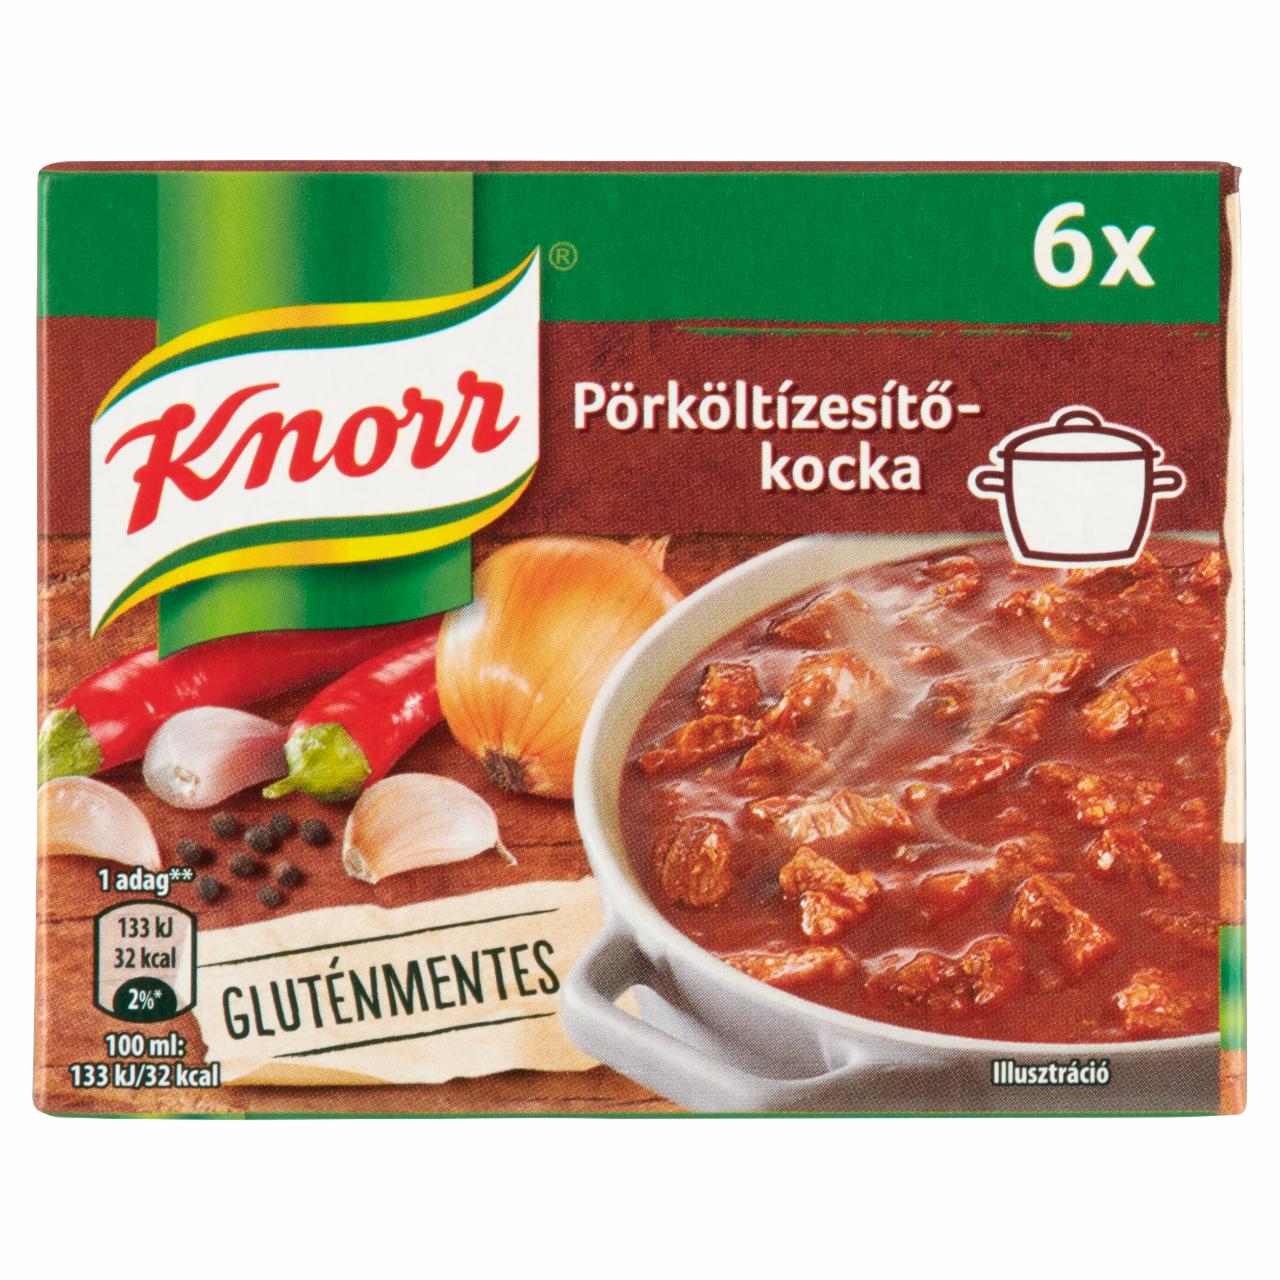 Képek - Knorr pörköltízesítő-kocka 6 x 10 g (60 g)